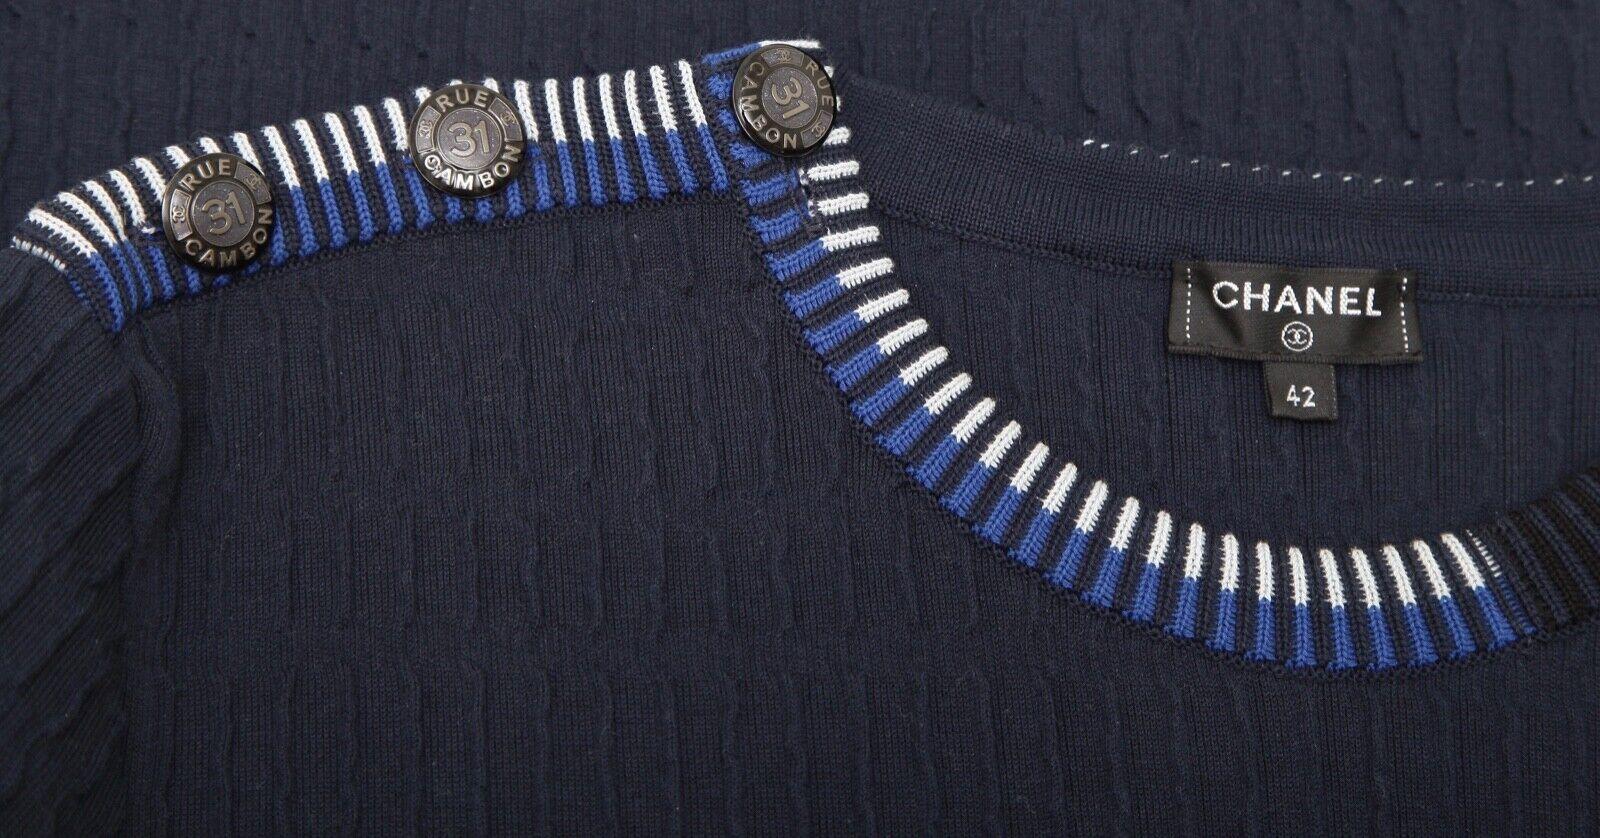 CHANEL Sweater Knit Dress Navy Blue White Short Sleeve Sz 42 1